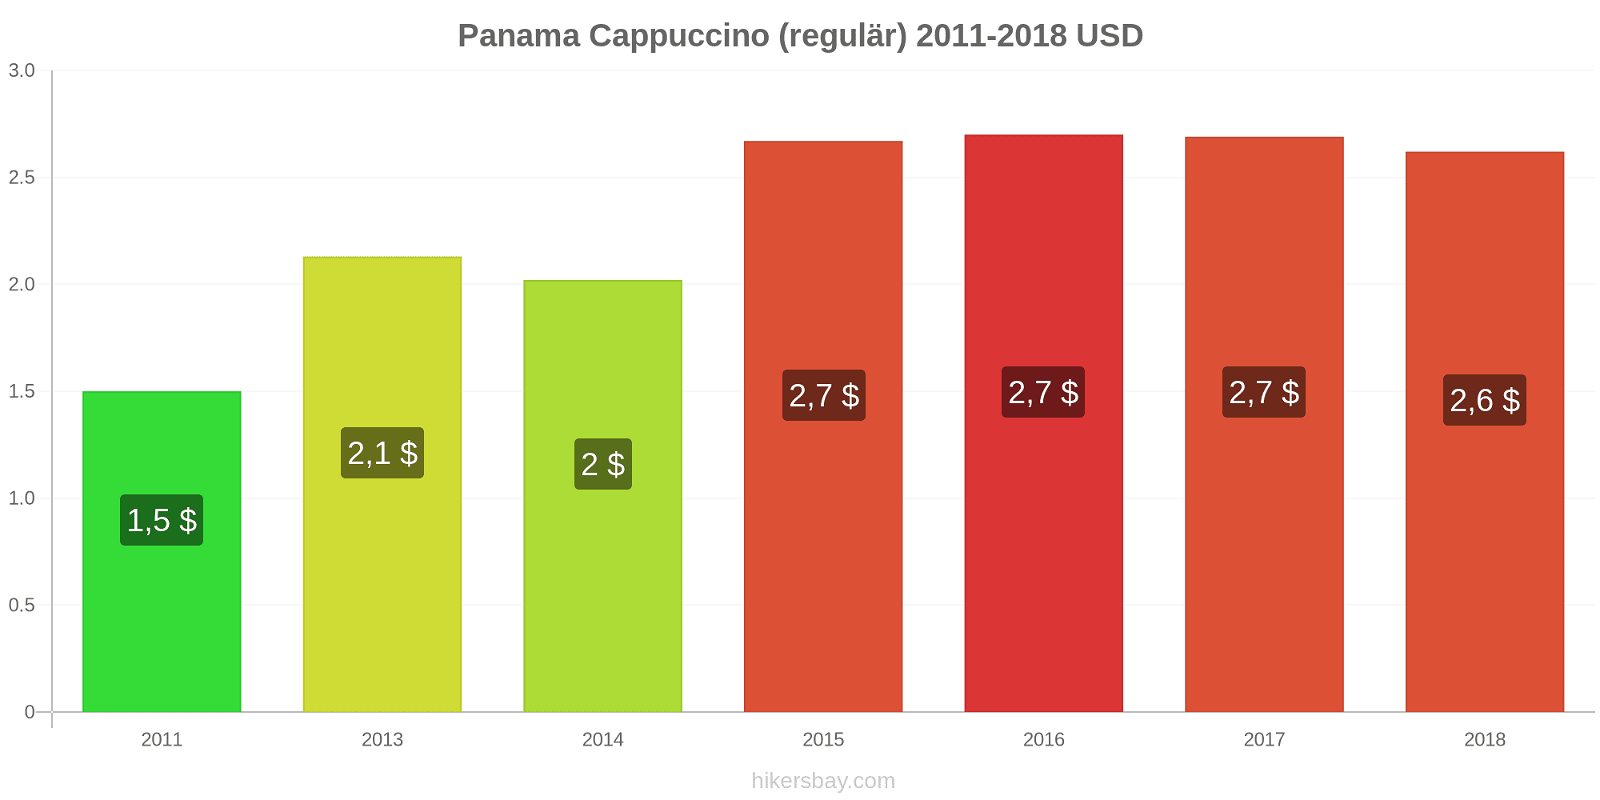 Panama Preisänderungen Cappuccino (regulär) hikersbay.com